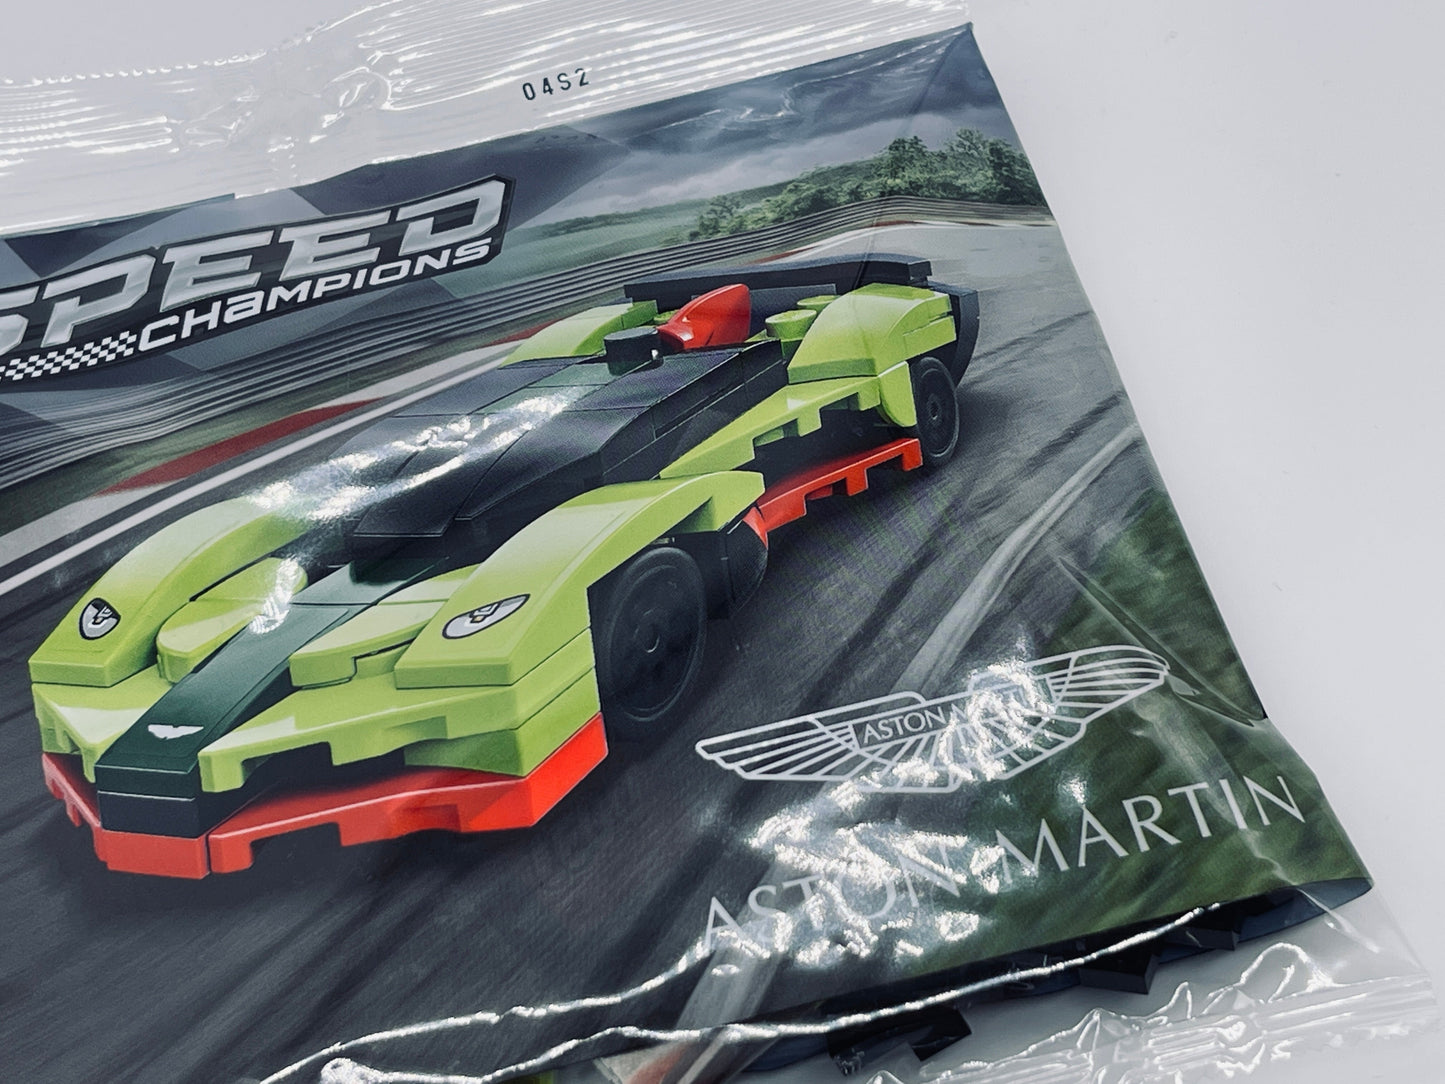 LEGO Speed Champions Aston Martin Valkyrie AMR Pro Polybag (30434)